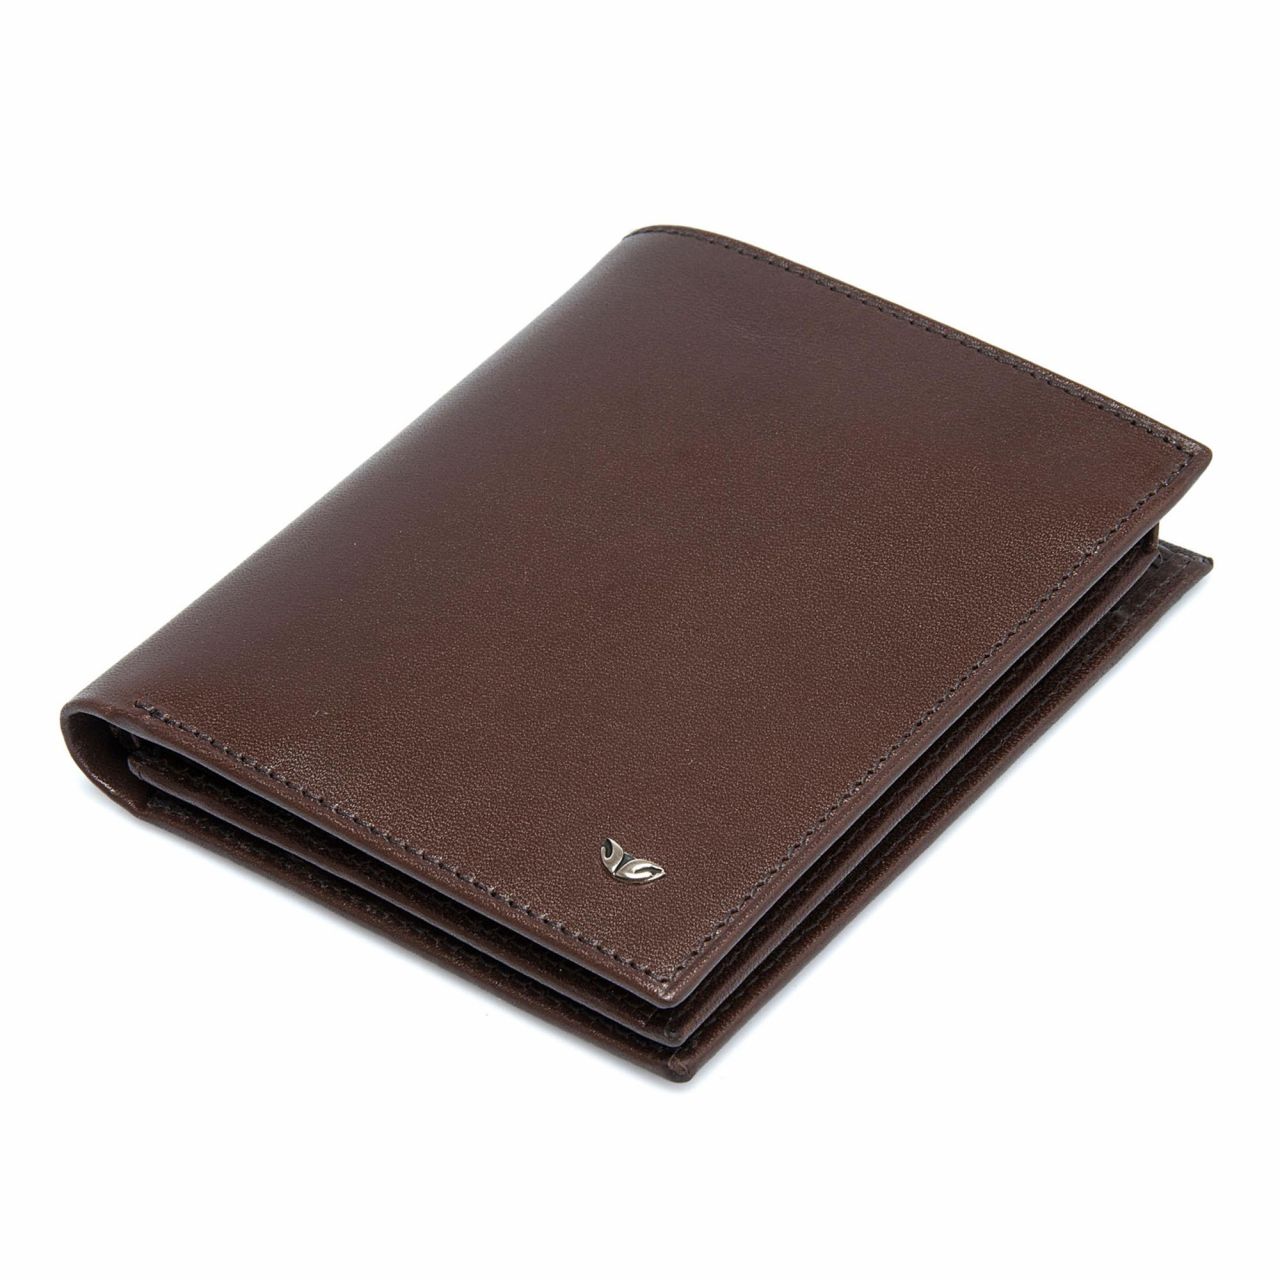 Exclusive Dark Brown Leather Wallet for Men